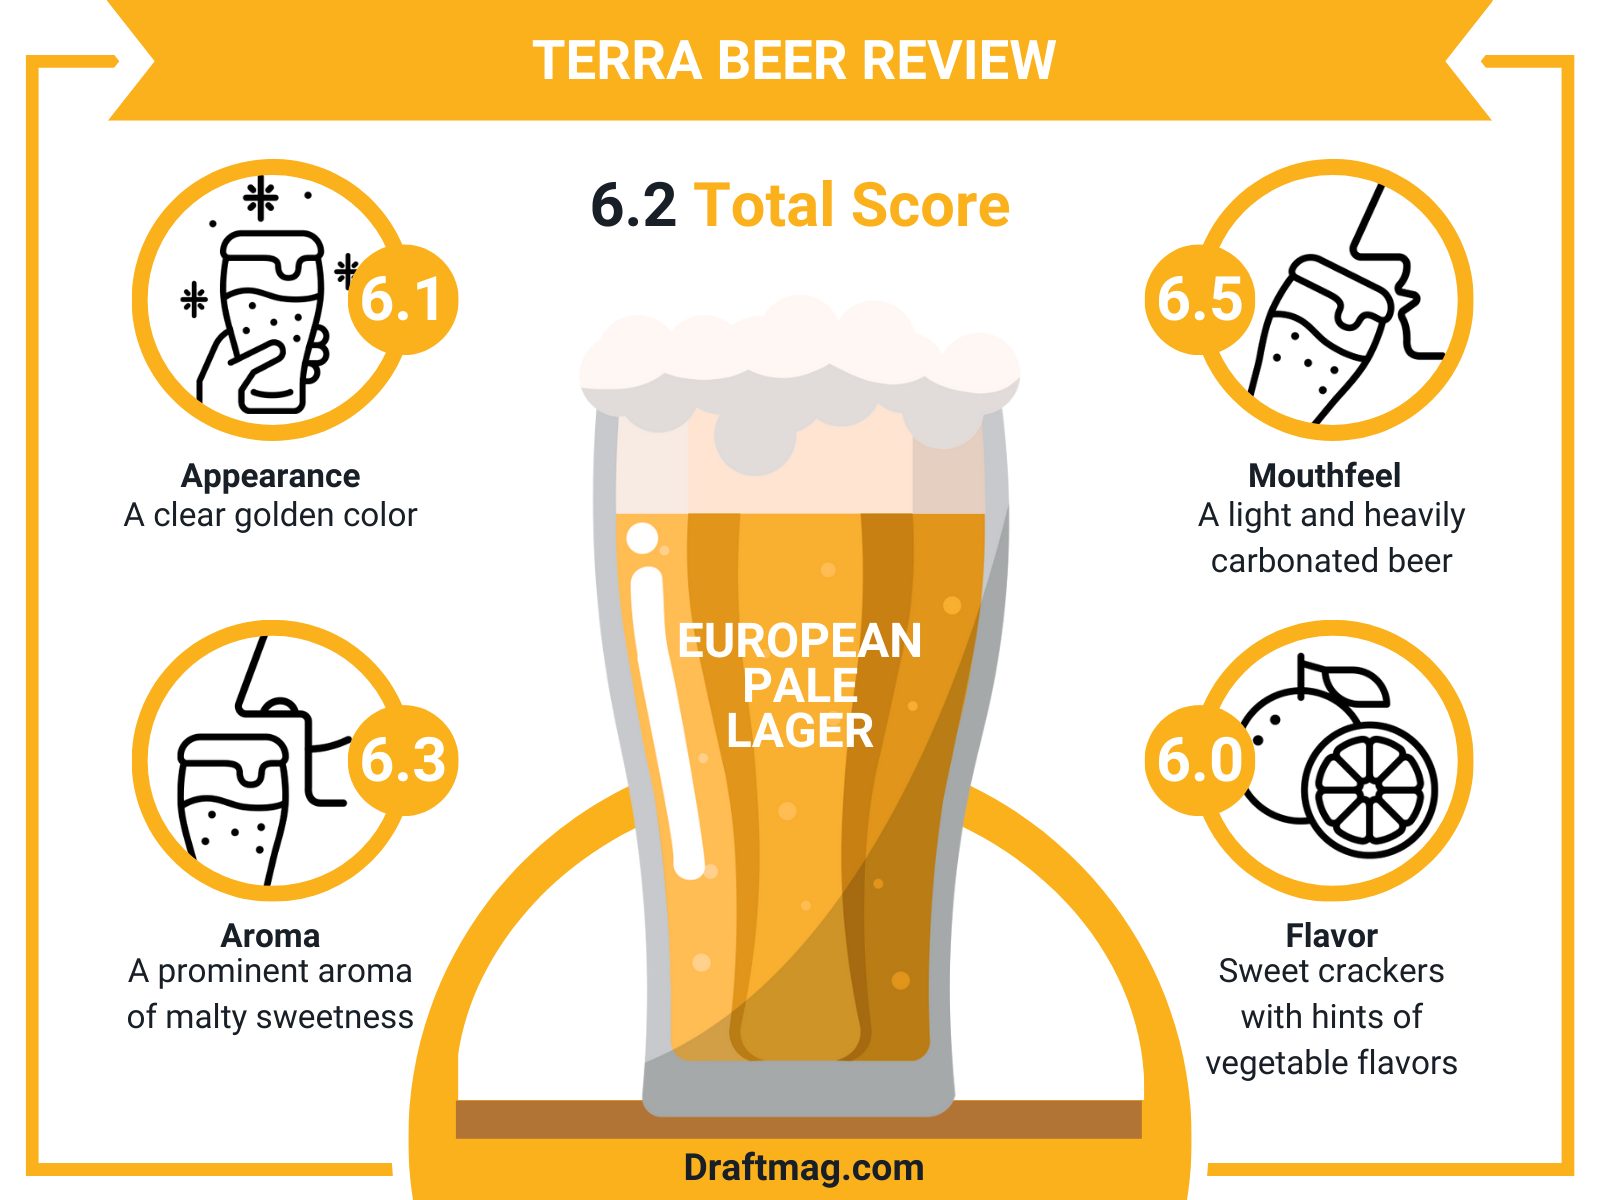 Terra Beer Review Infographic